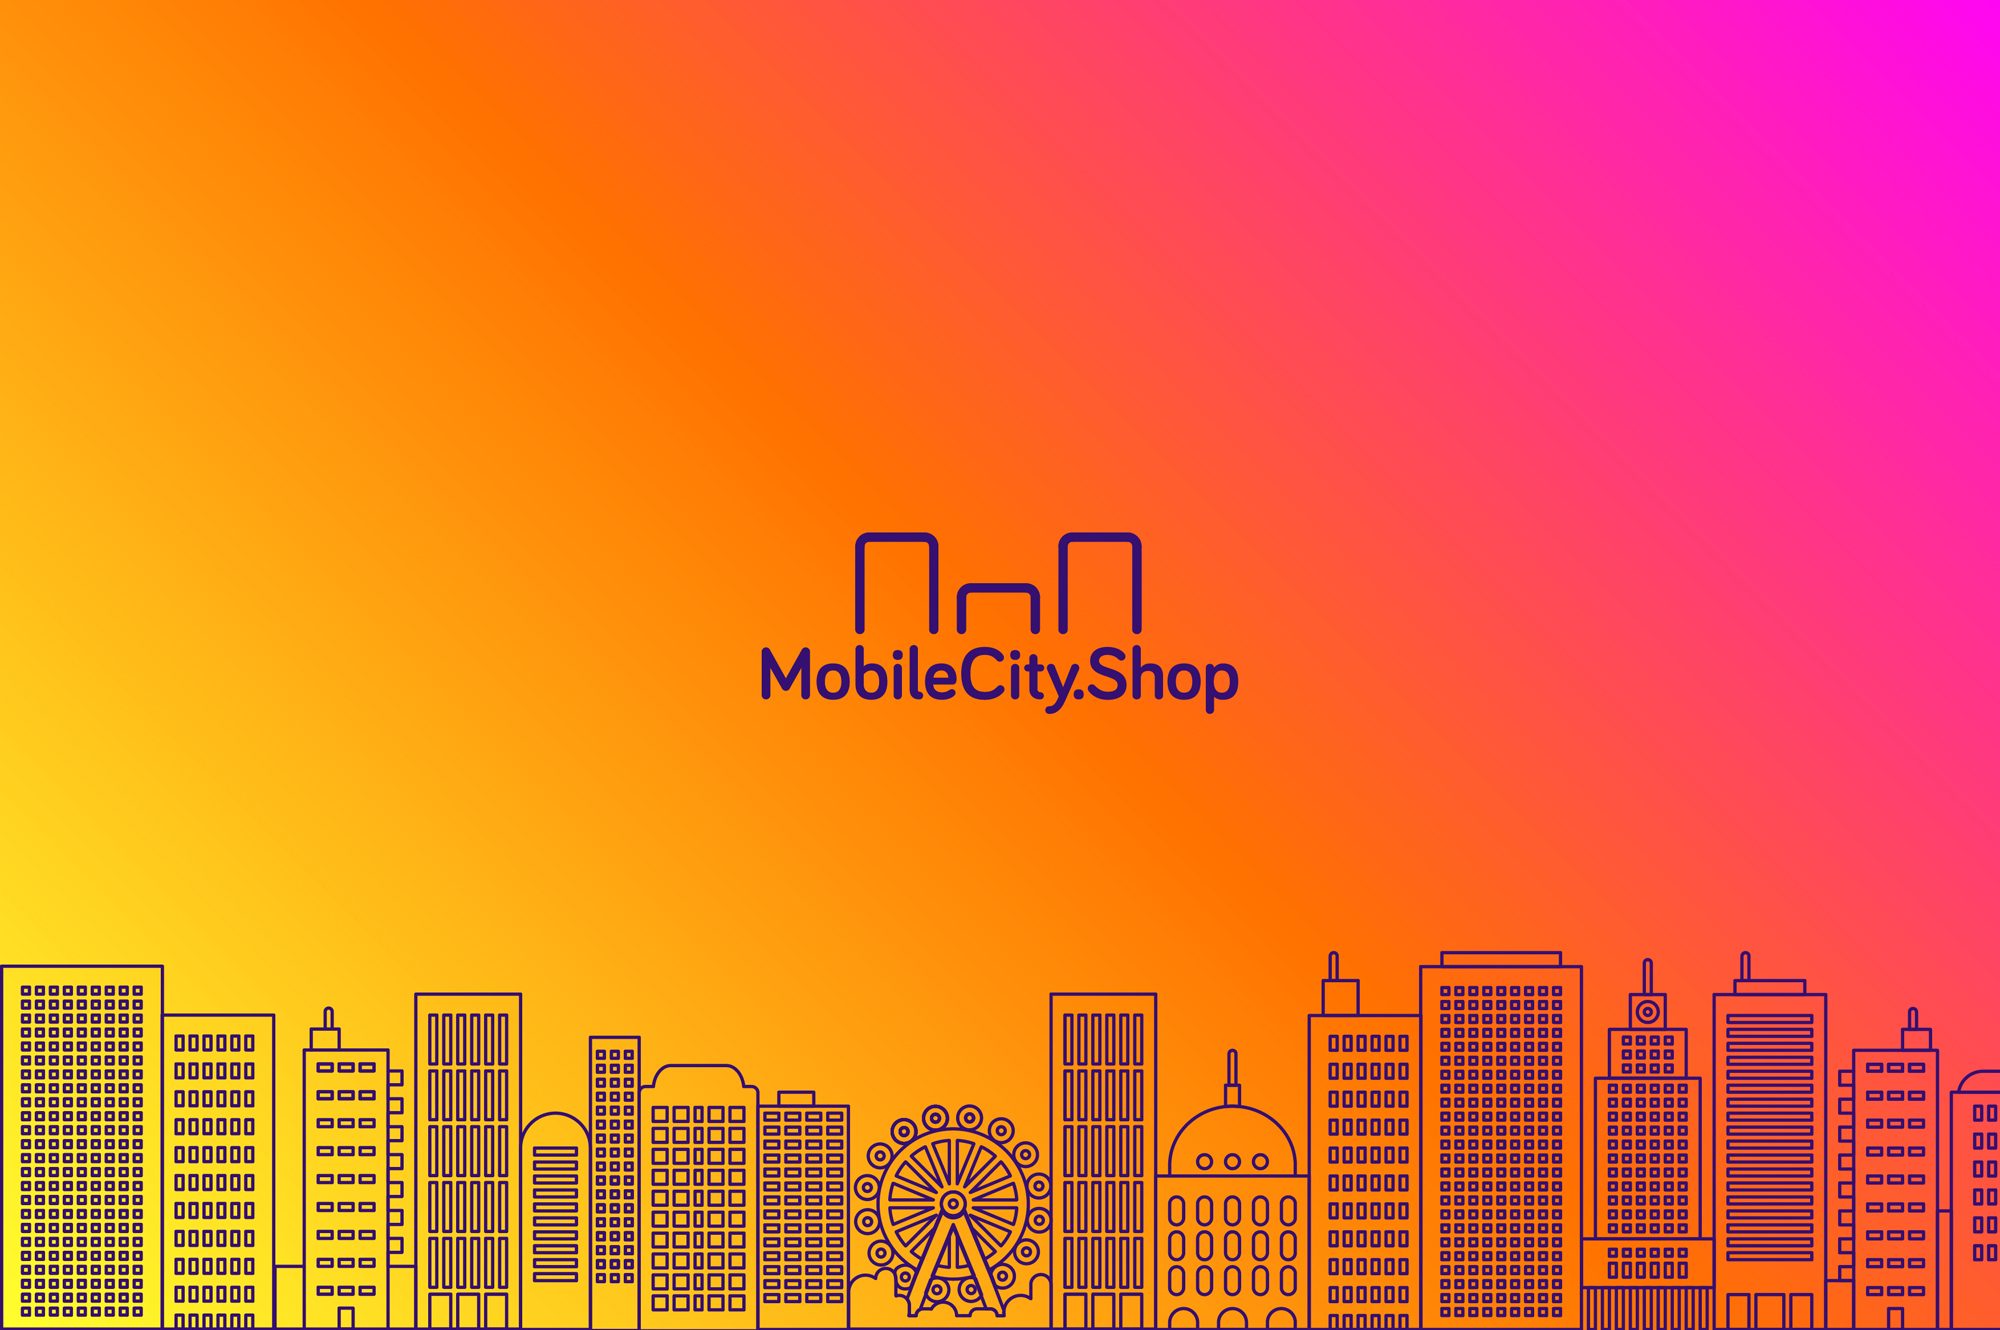 MobileCity.Shop - logo a KOLOR